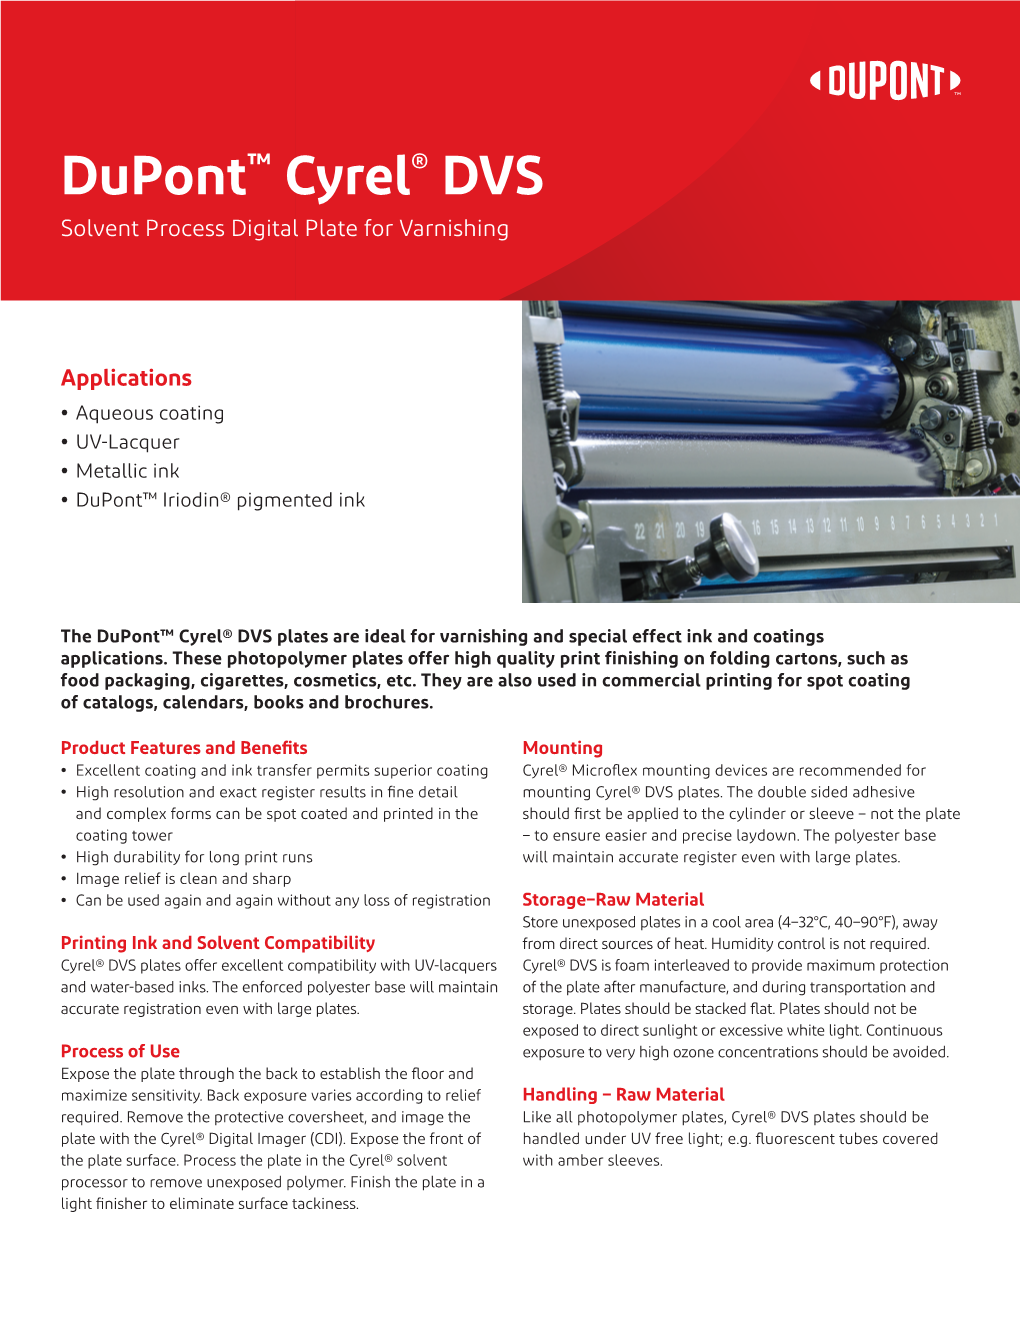 Cyrel® DVS Digital/Analog Varnishing Plate